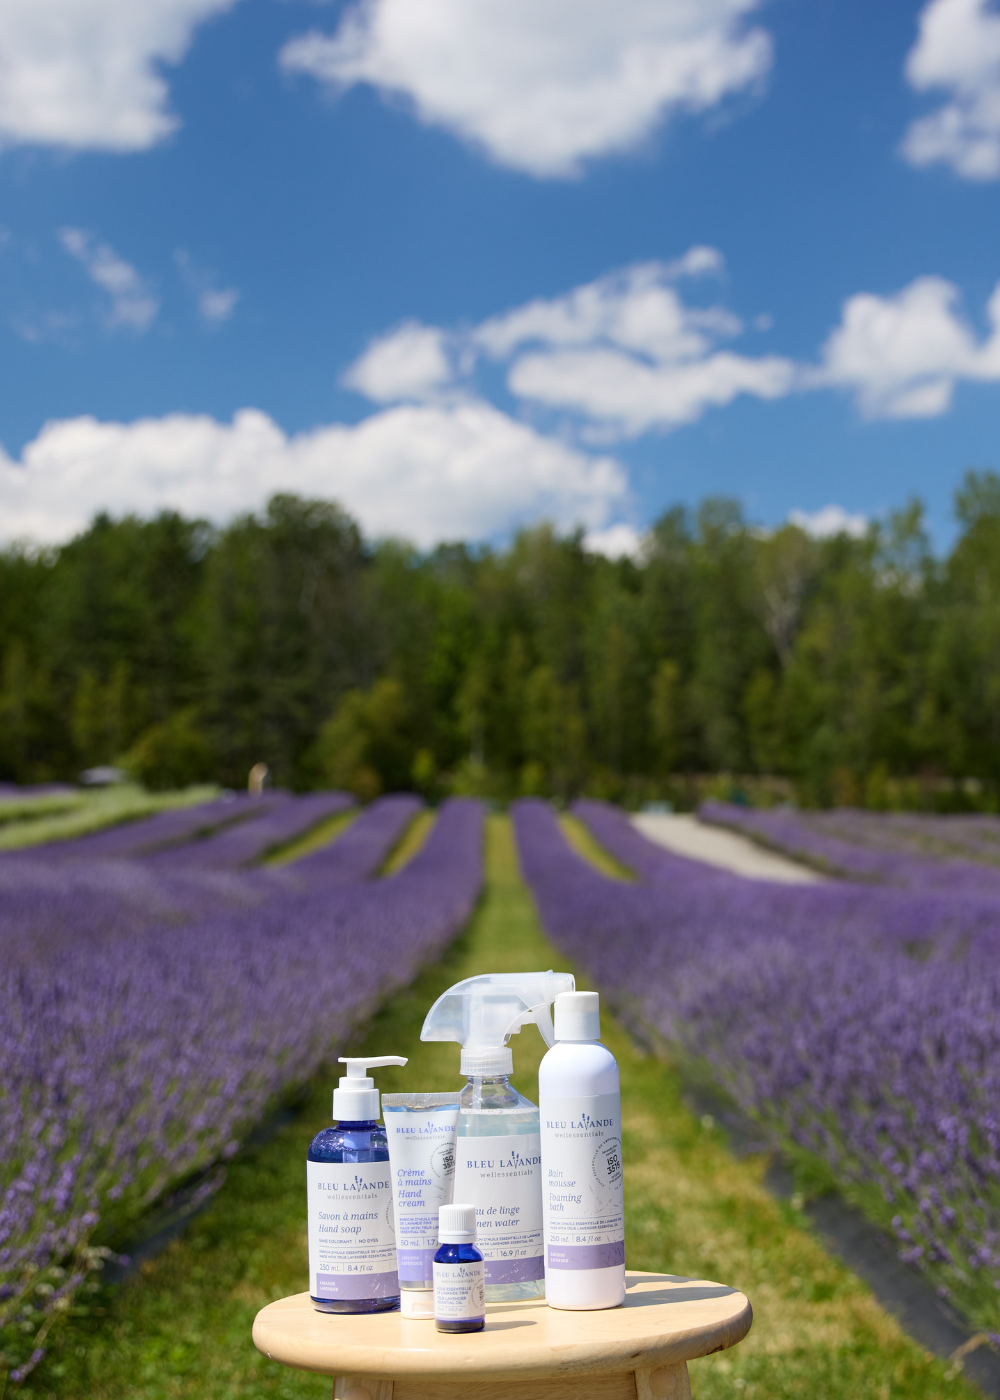 Bleu Lavande | Natural Lavender Products and Lavender Fields